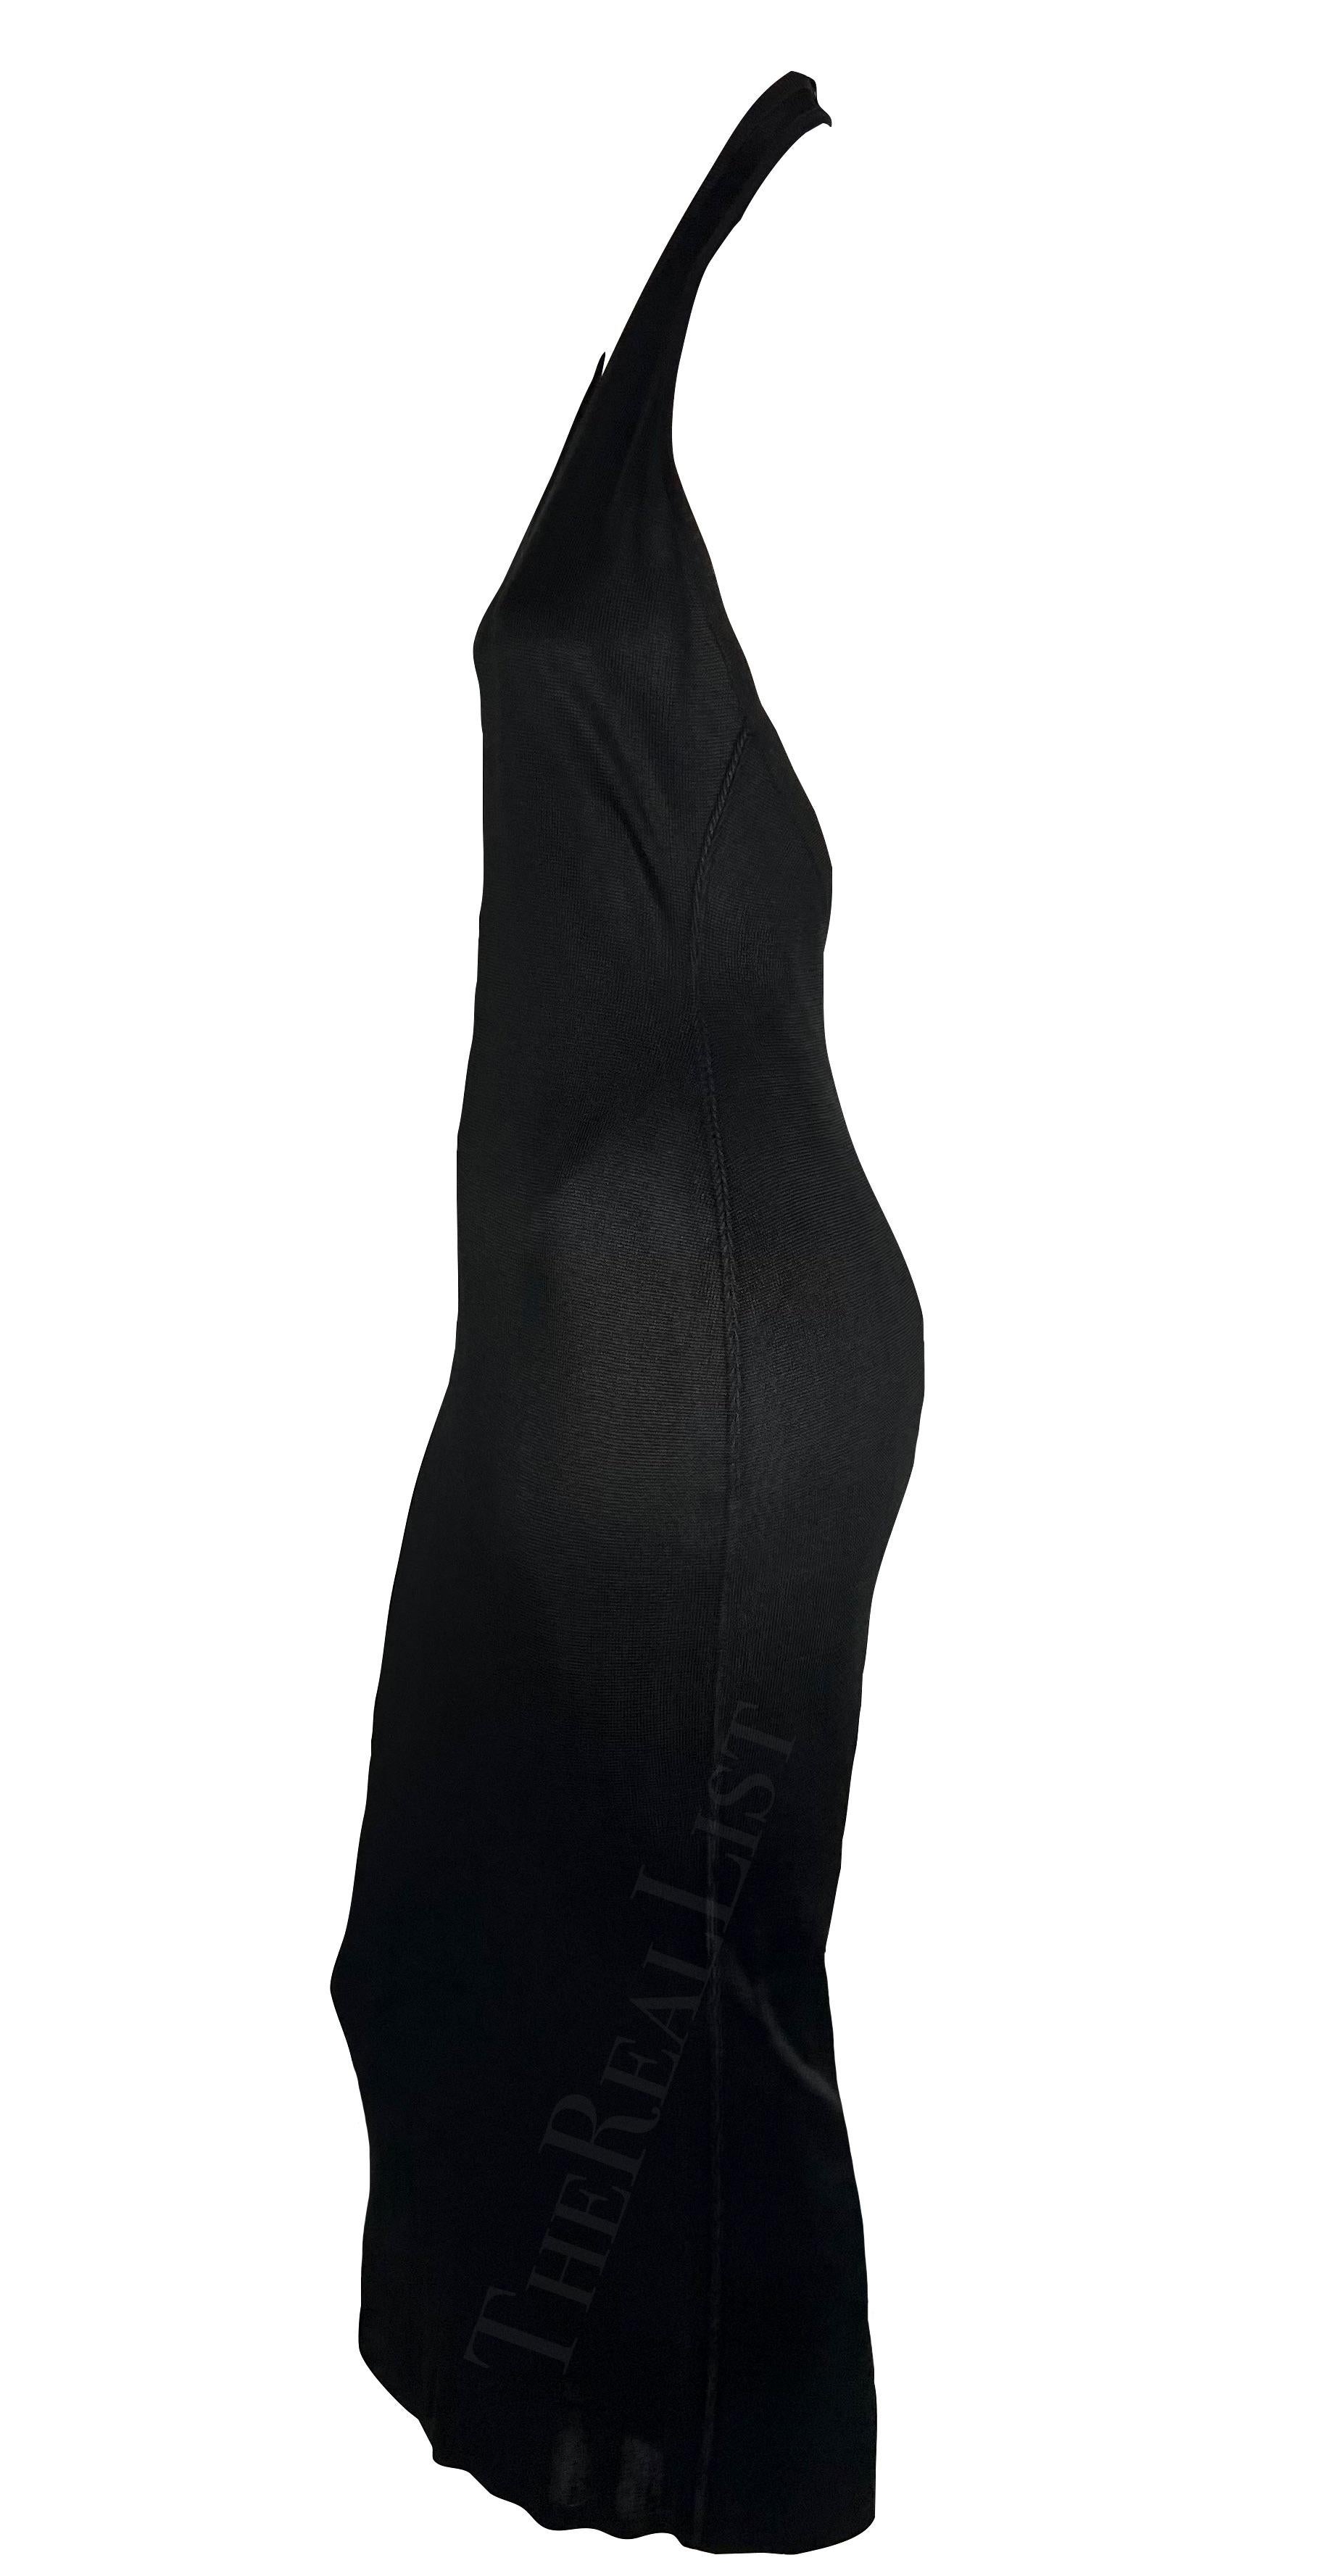 S/S 1986 Azzedine Alaïa Black Knit Halter Neck Bodycon Backless Dress For Sale 2